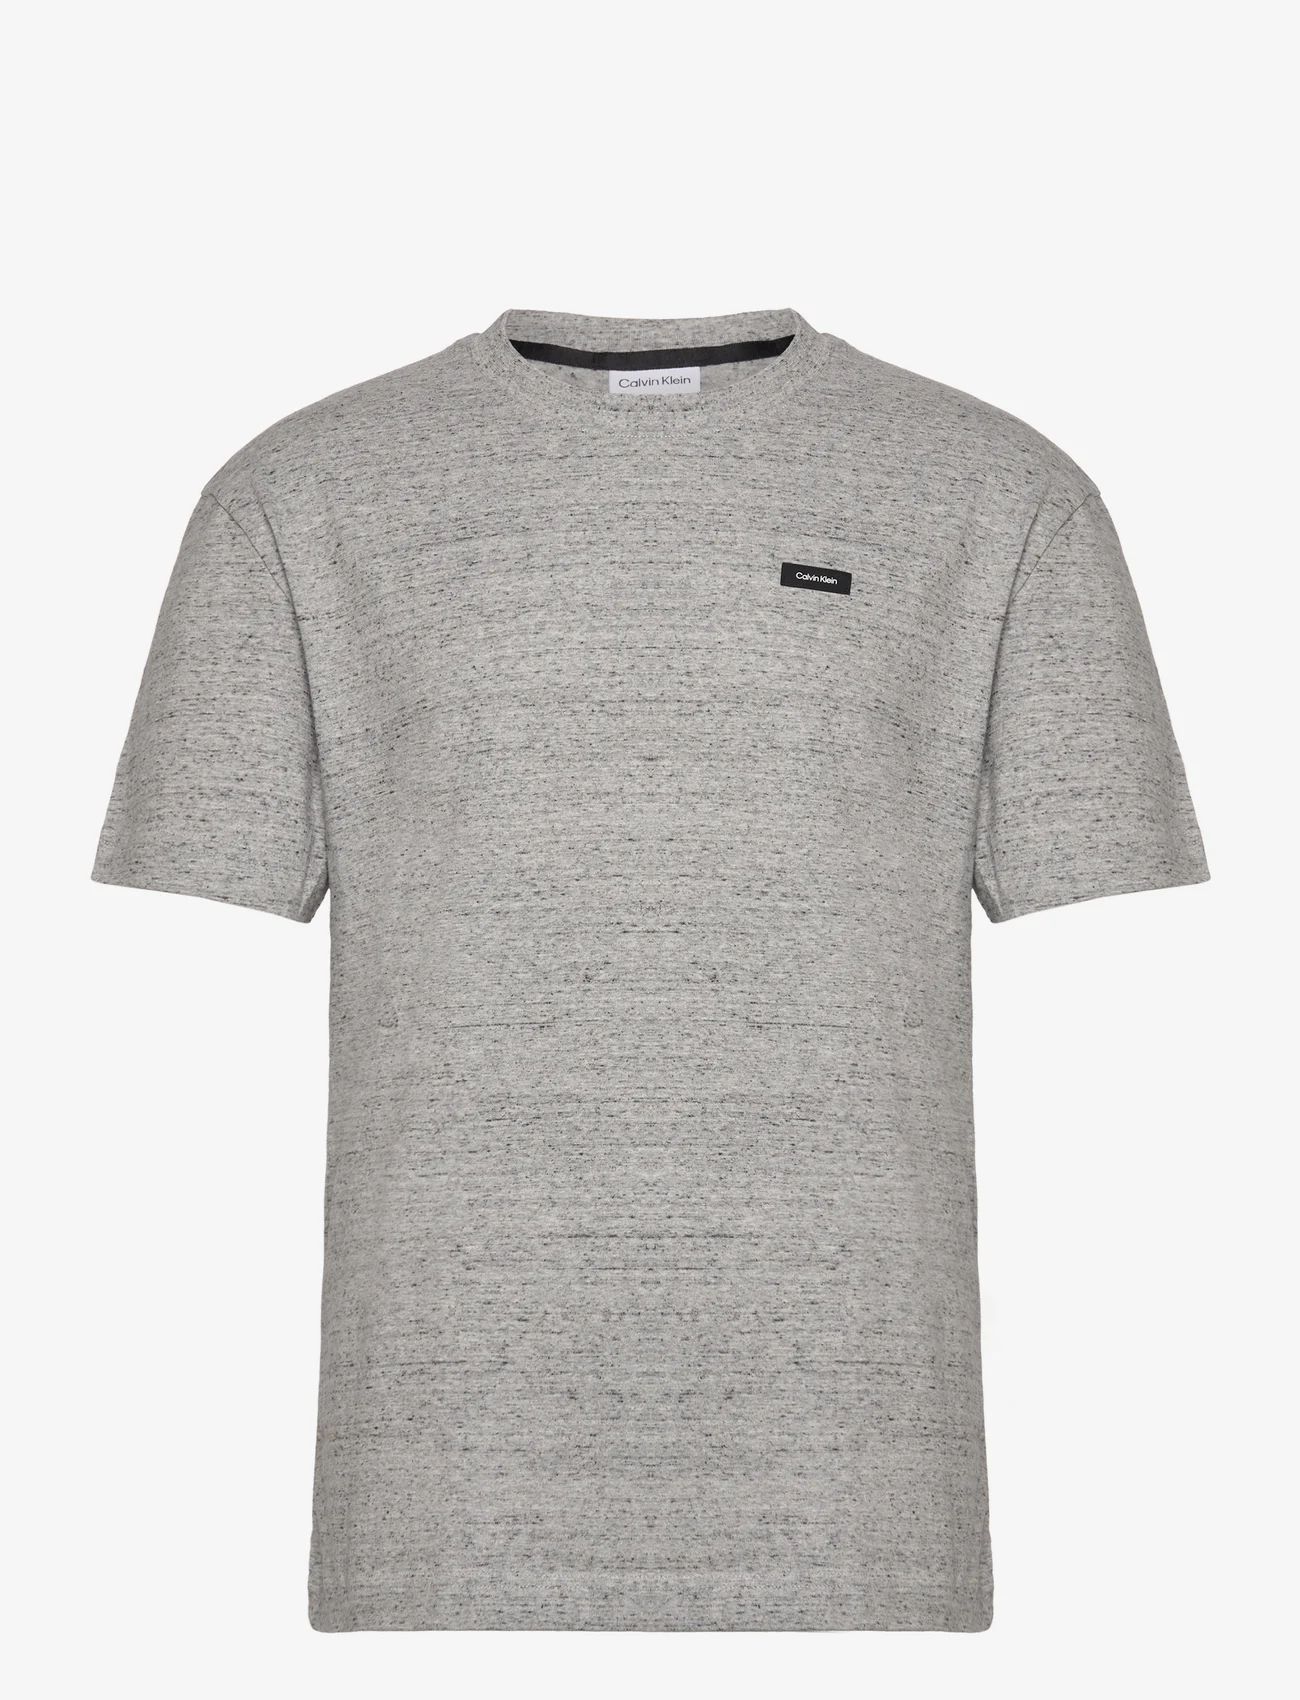 Calvin Klein - COTTON COMFORT FIT T-SHIRT - basic t-shirts - mid grey heather - 0